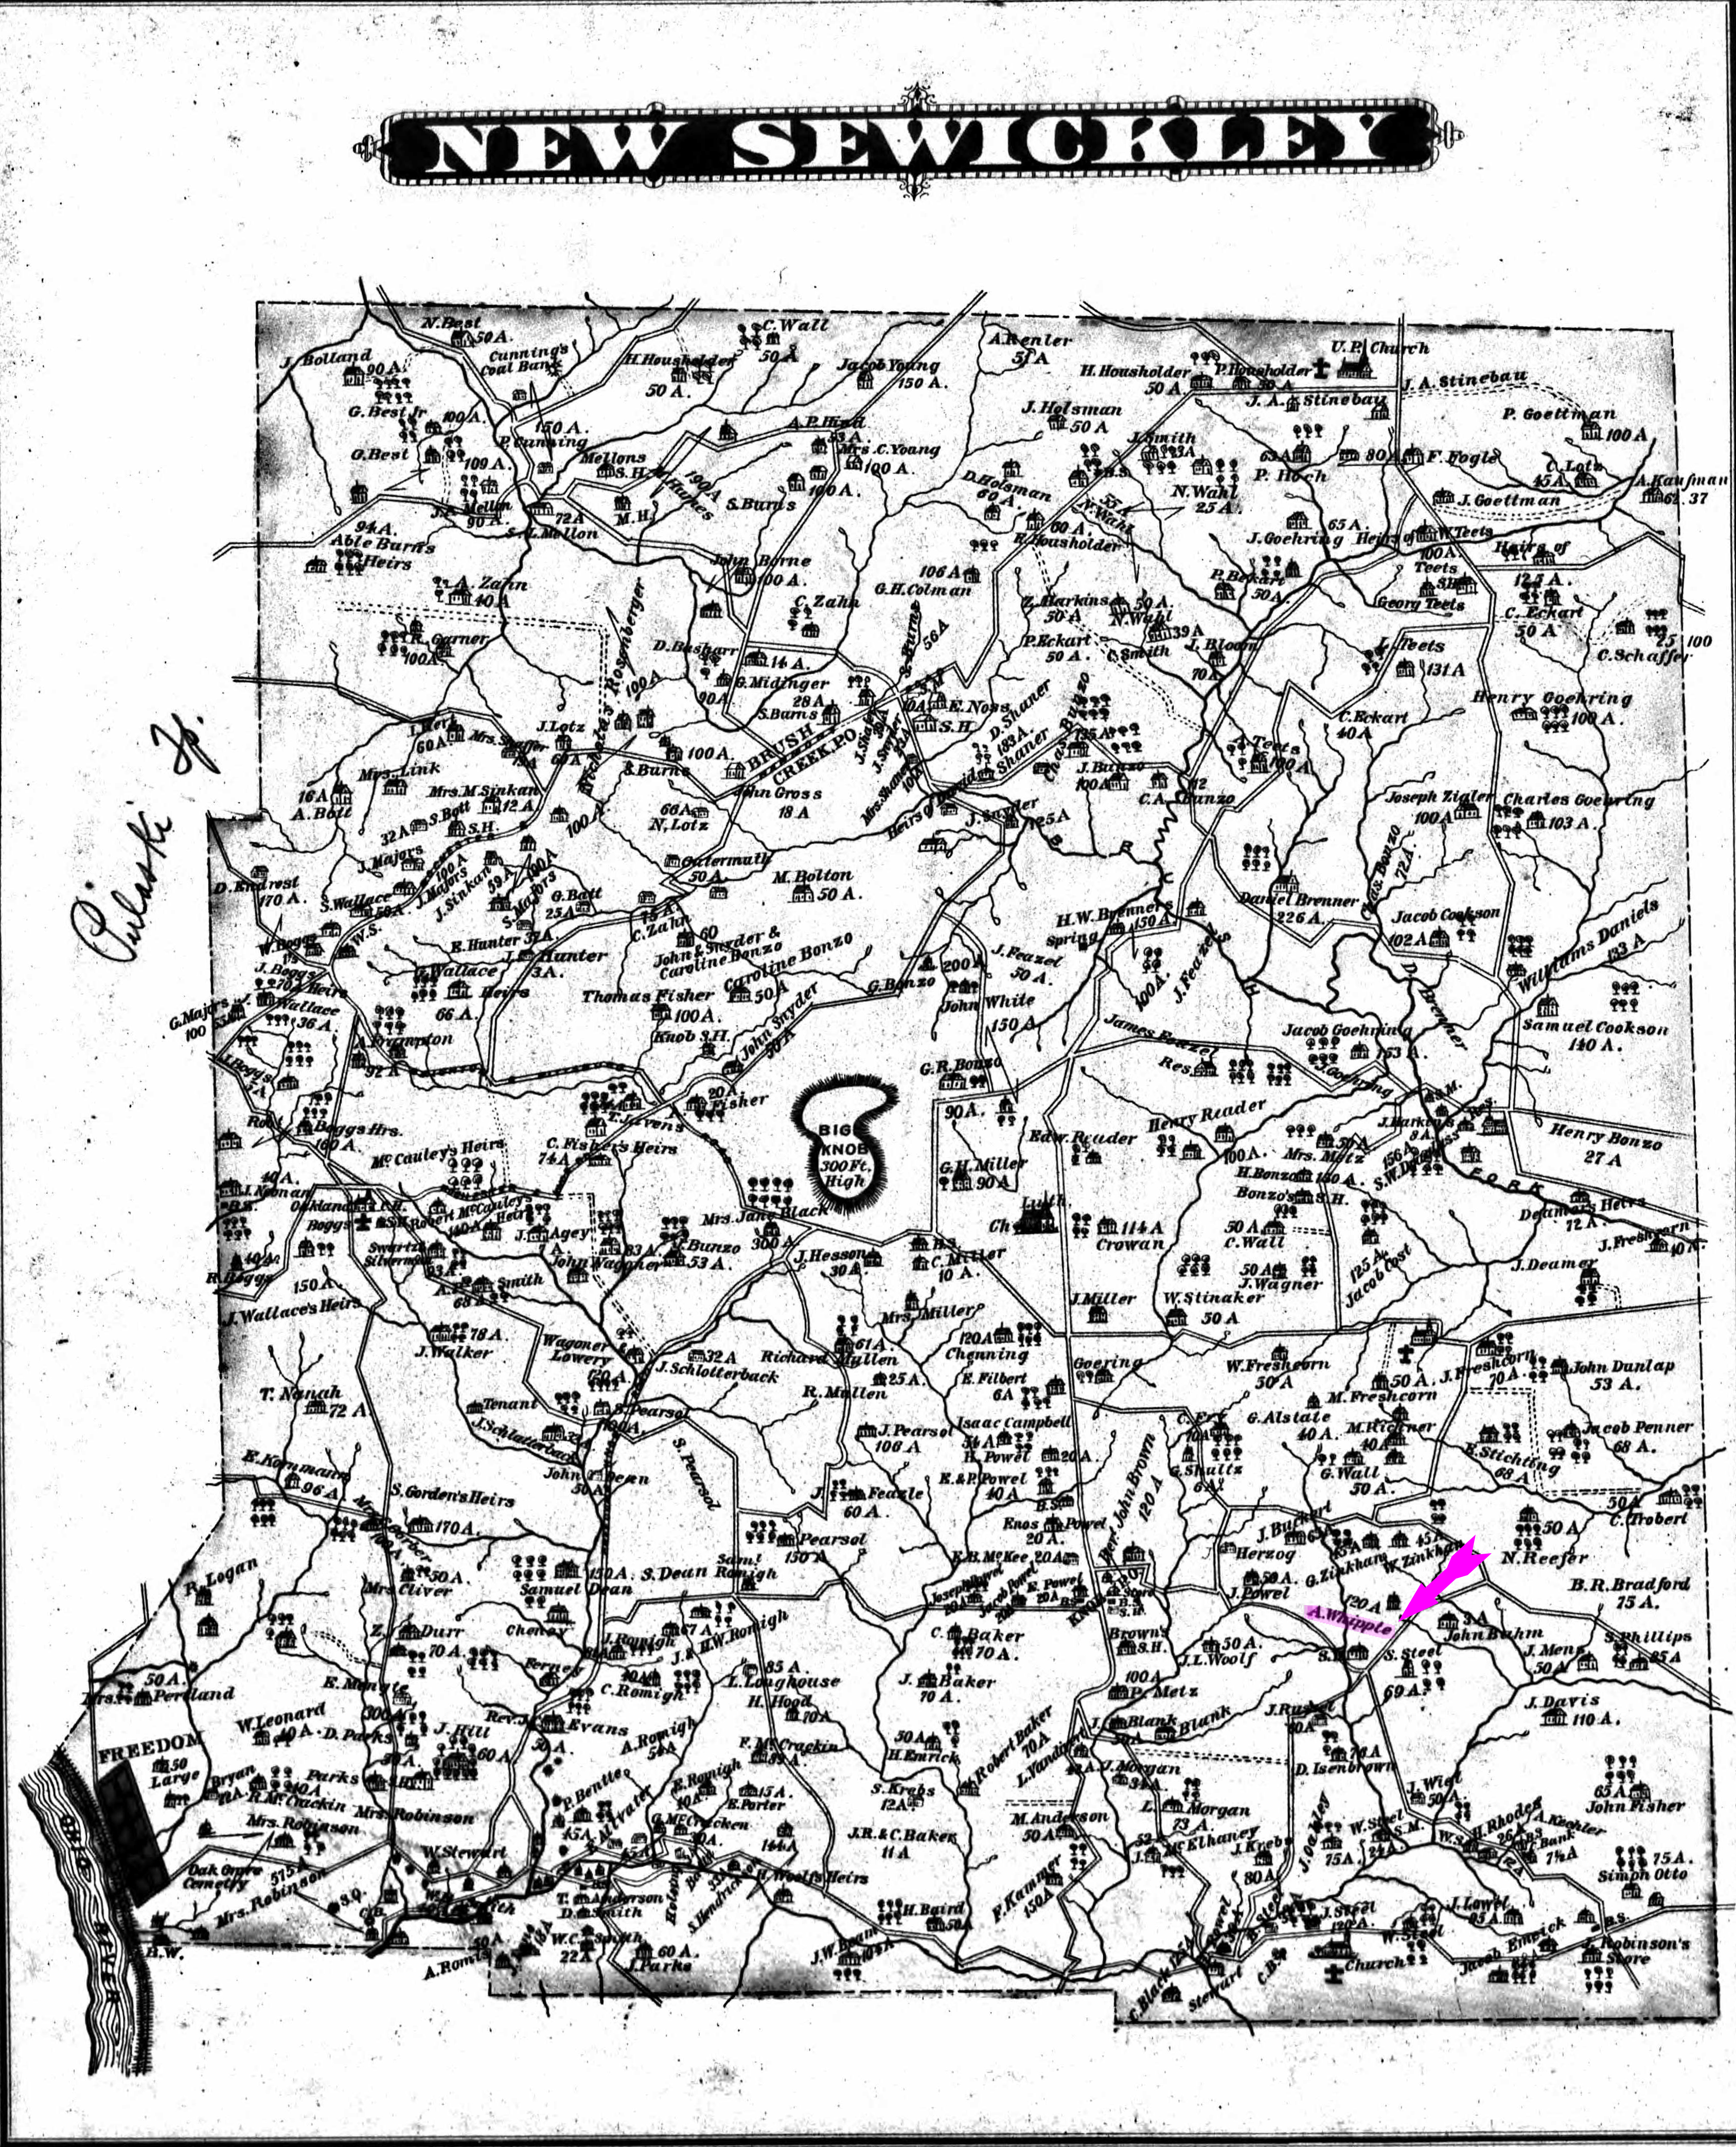 Adam Whipple Farm on 1876 LandOwnership Map